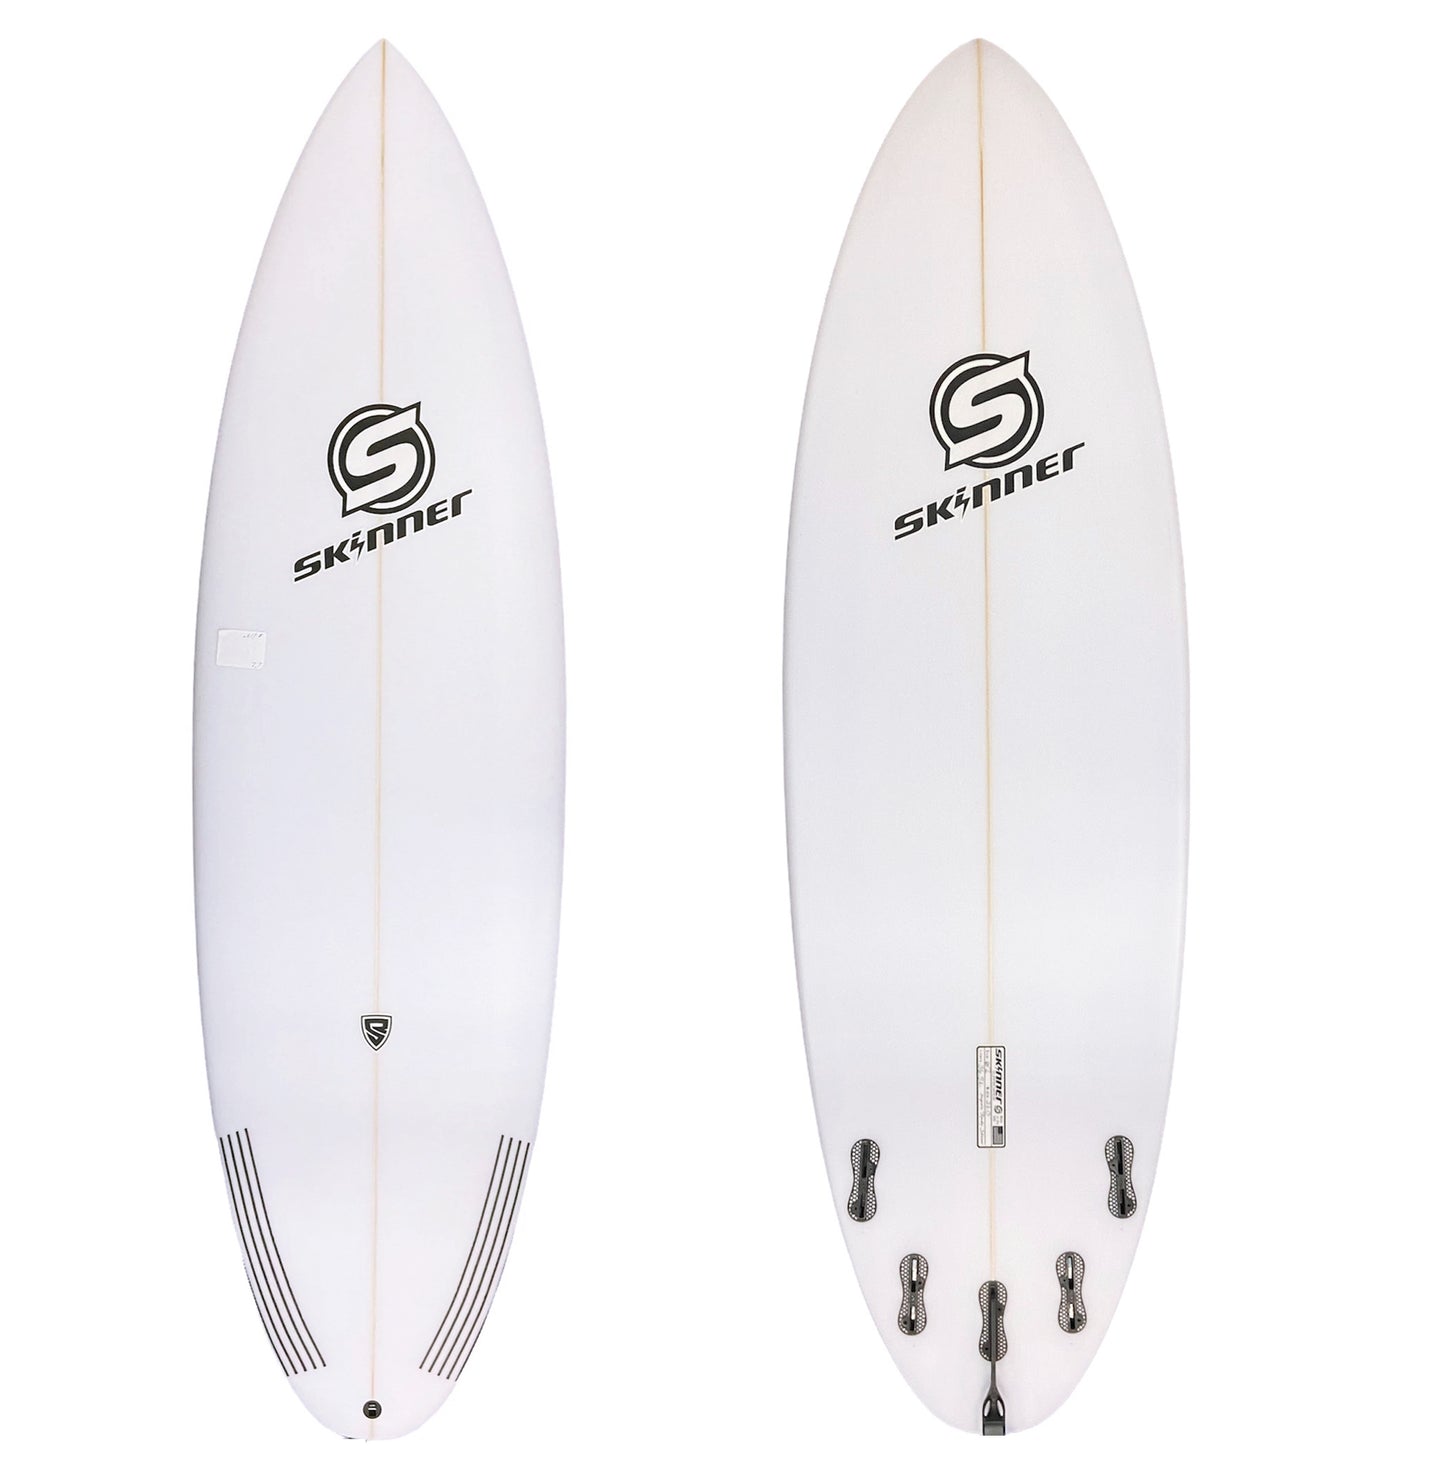 Skinner 6'2 x 21 x 36.5 Liters Round Tail Shortboard 5 FCS 2 Plugs Surfboard